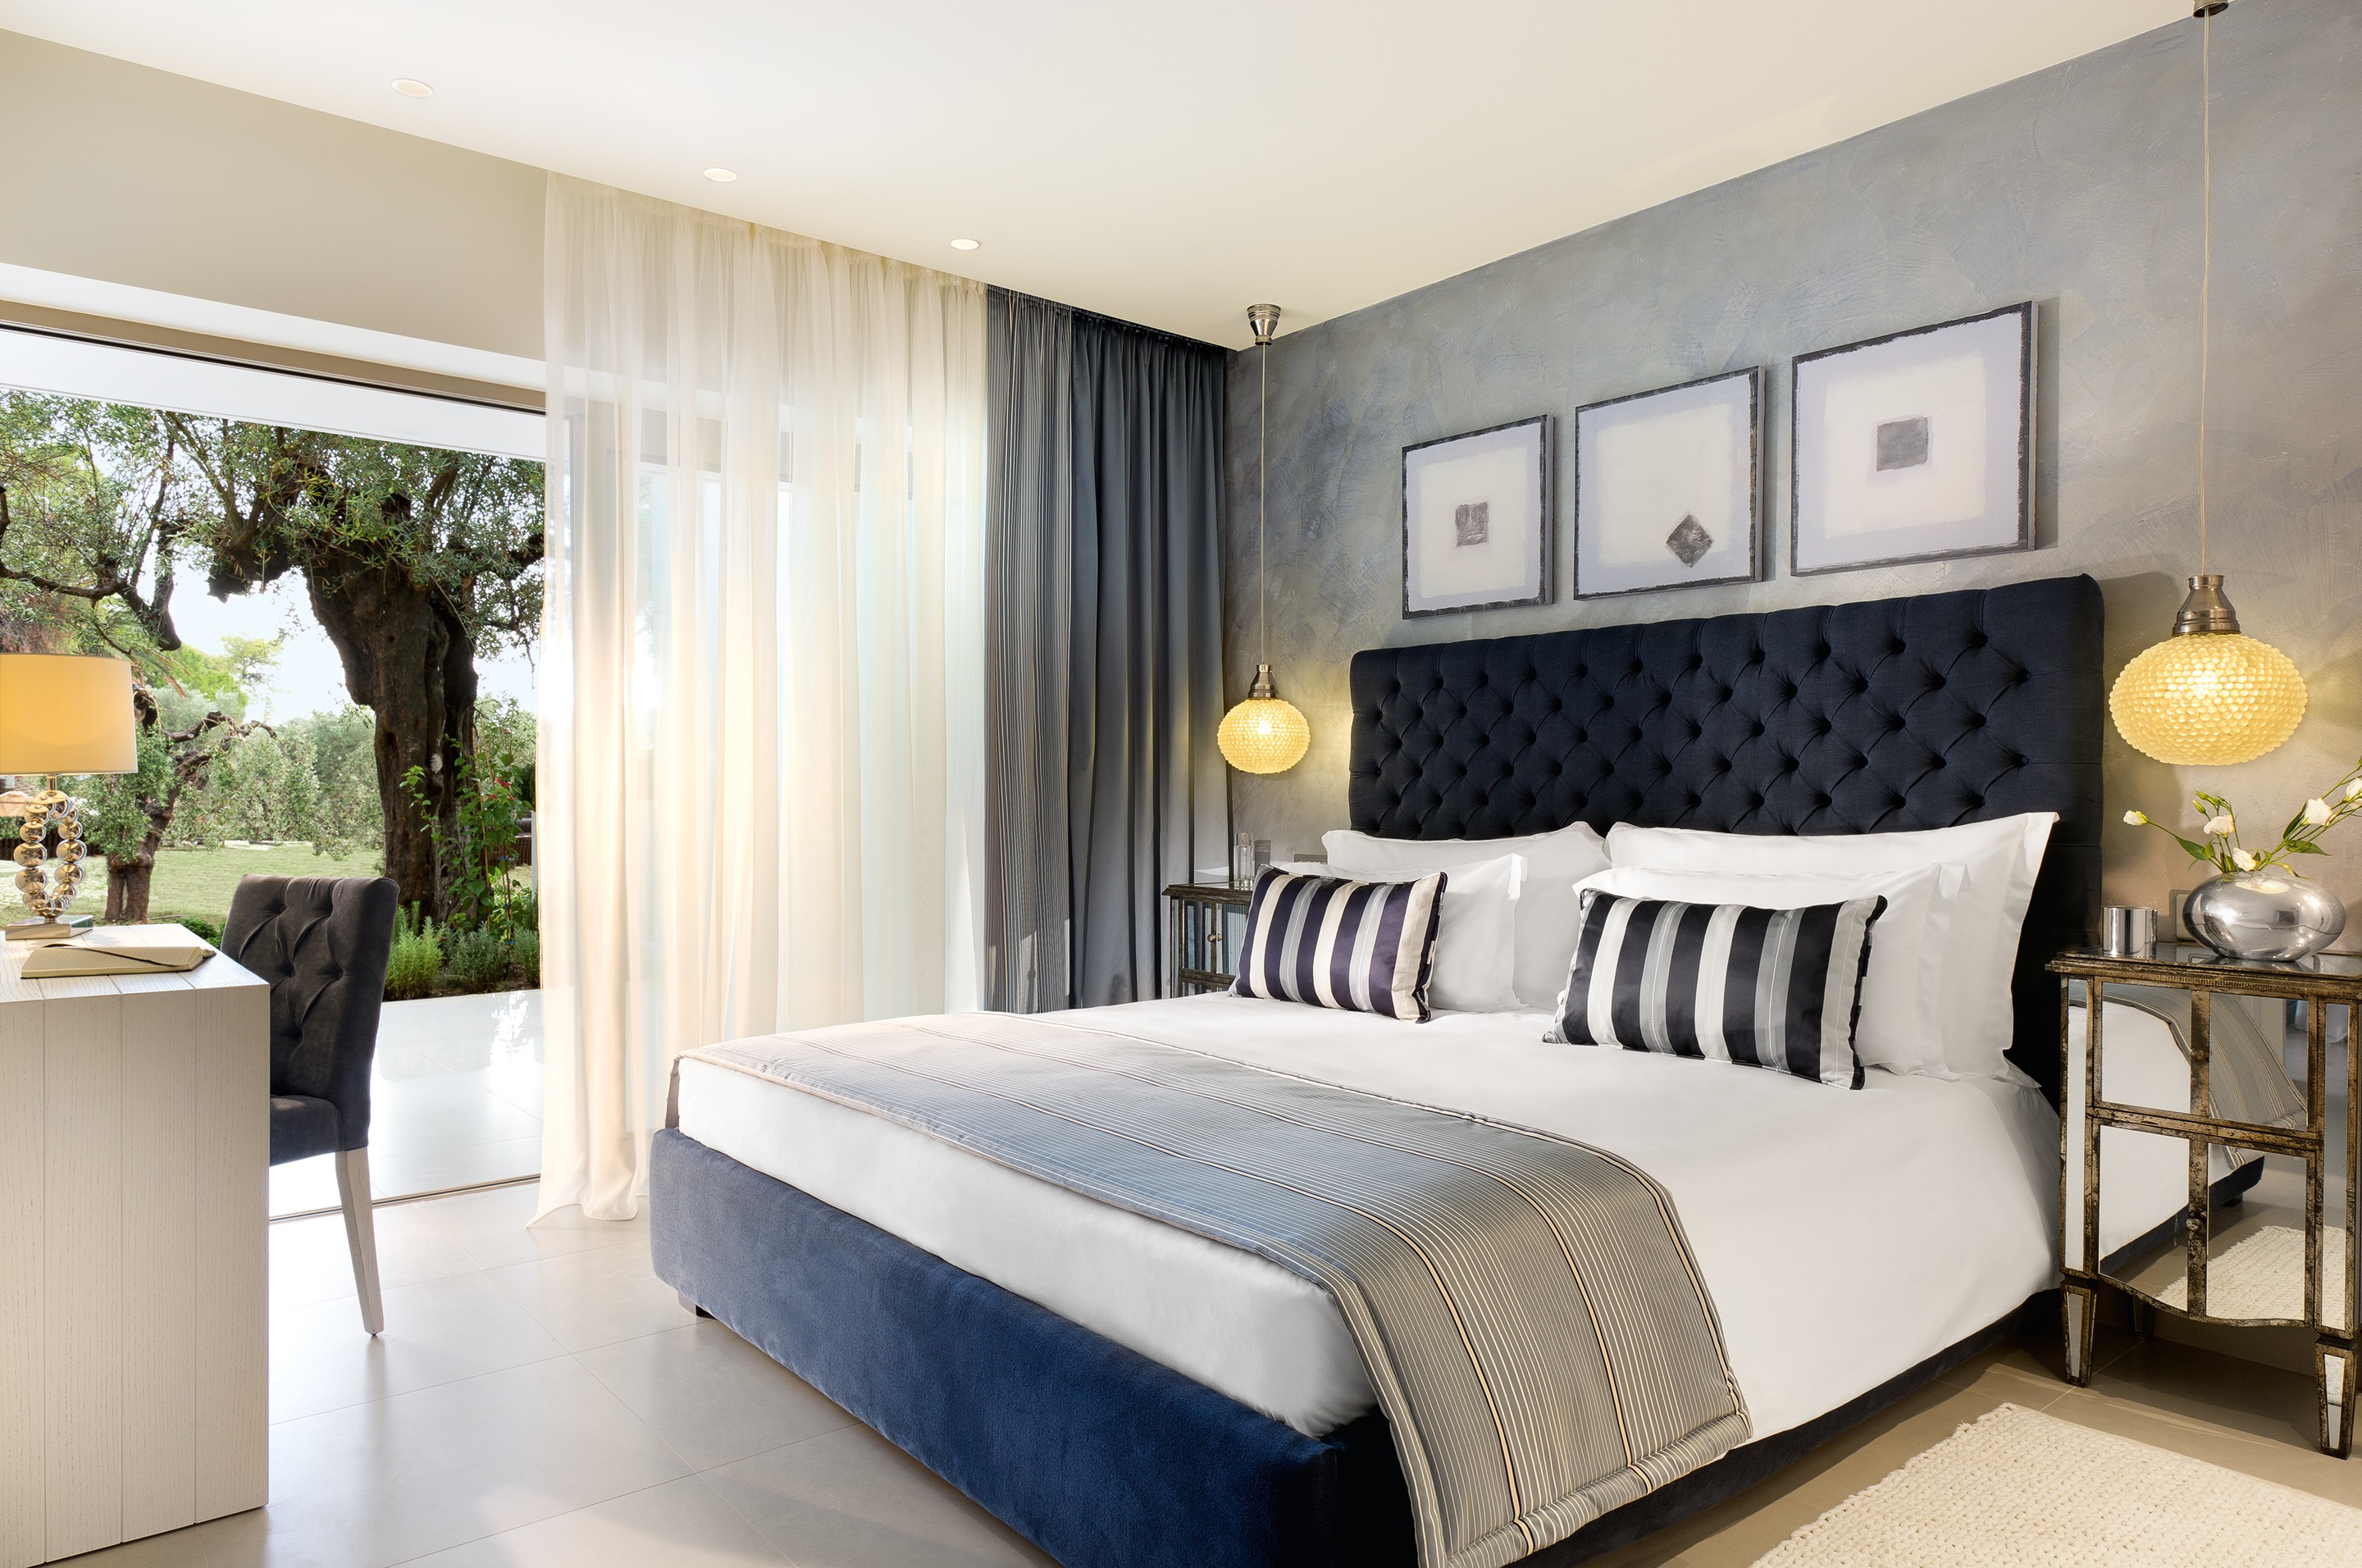 Deluxe one bedroom bungalow suite of the Ikos Olivia hotel